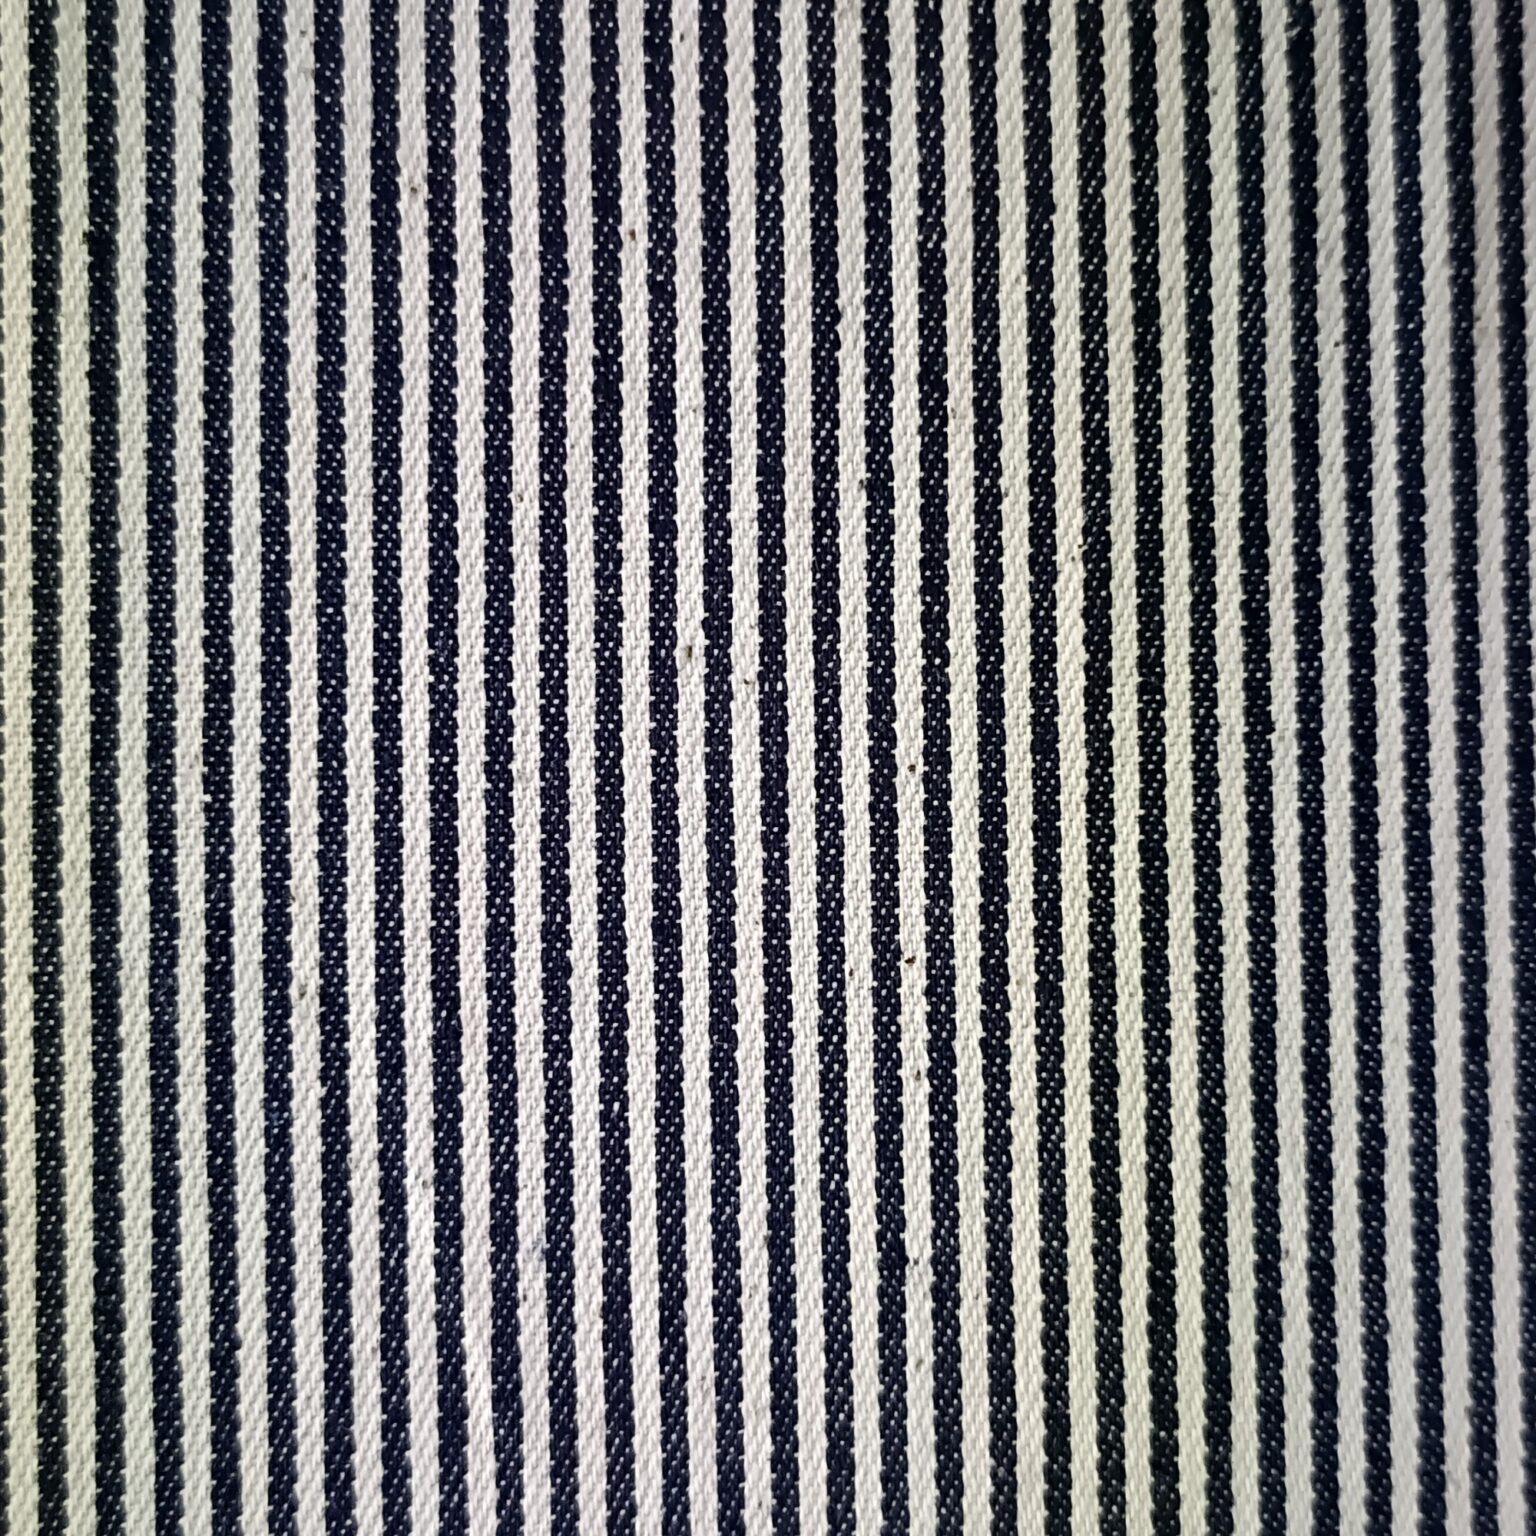 Striped Denim Blue Fabric - Lightweight Cotton - 155cm Wide